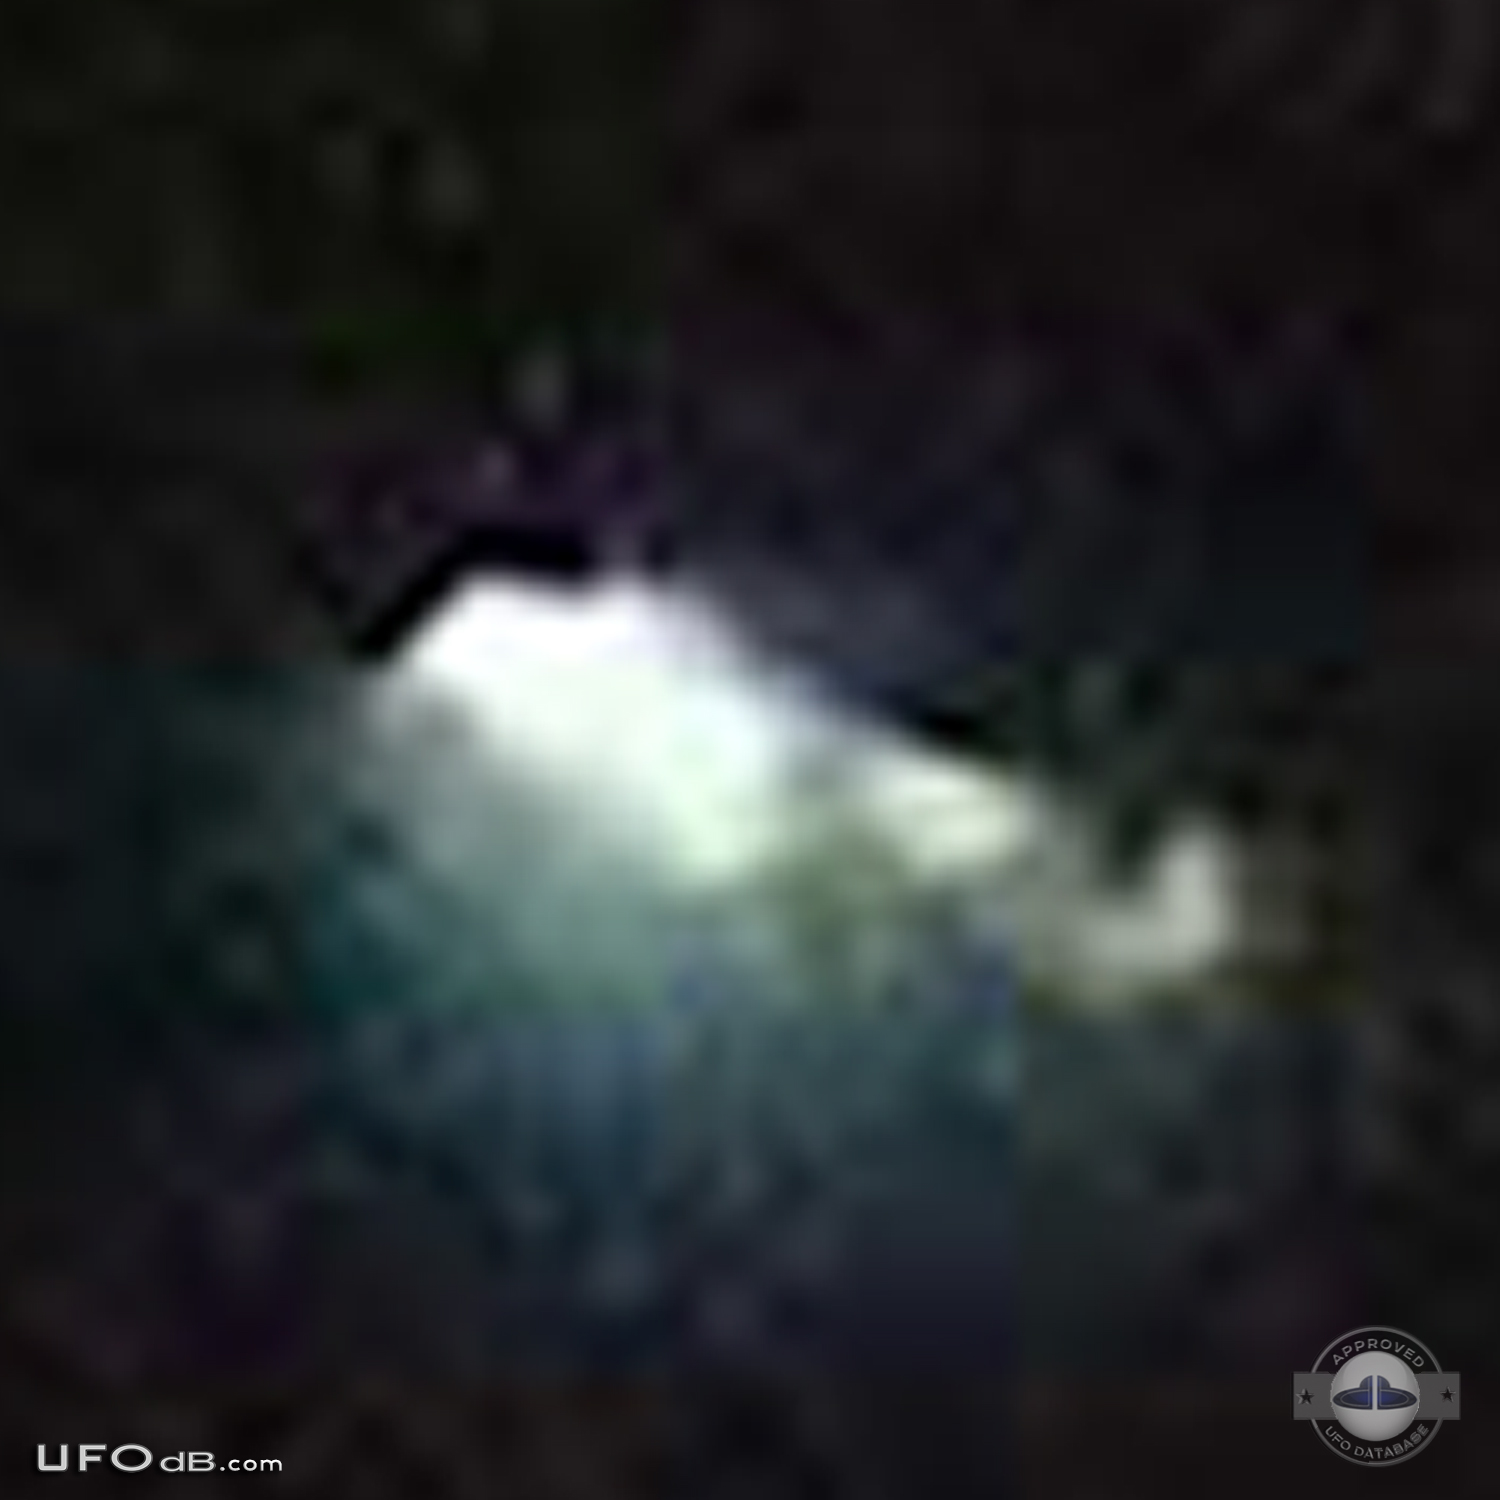 Moon picture reveals bright UFO in the night sky in Ecuador in 2009 UFO Picture #446-8